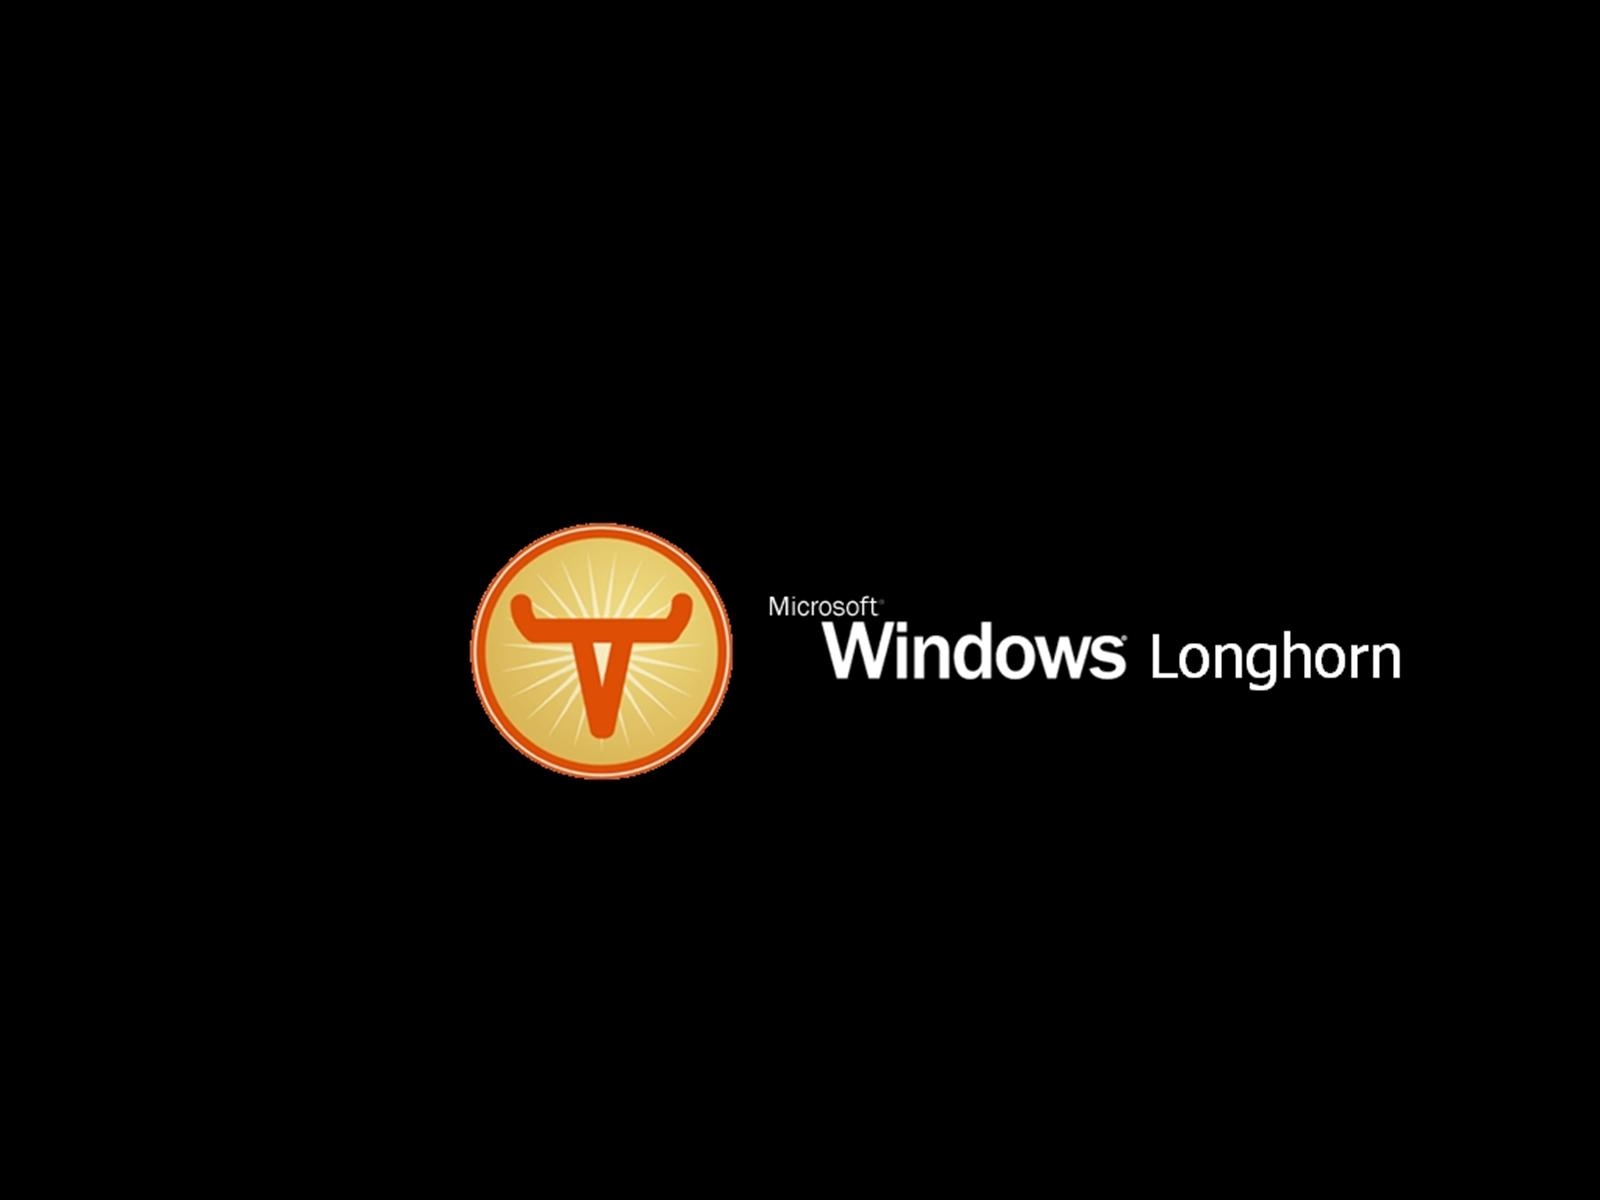 Microsoft Windows Longhorn Logo Wallpaper